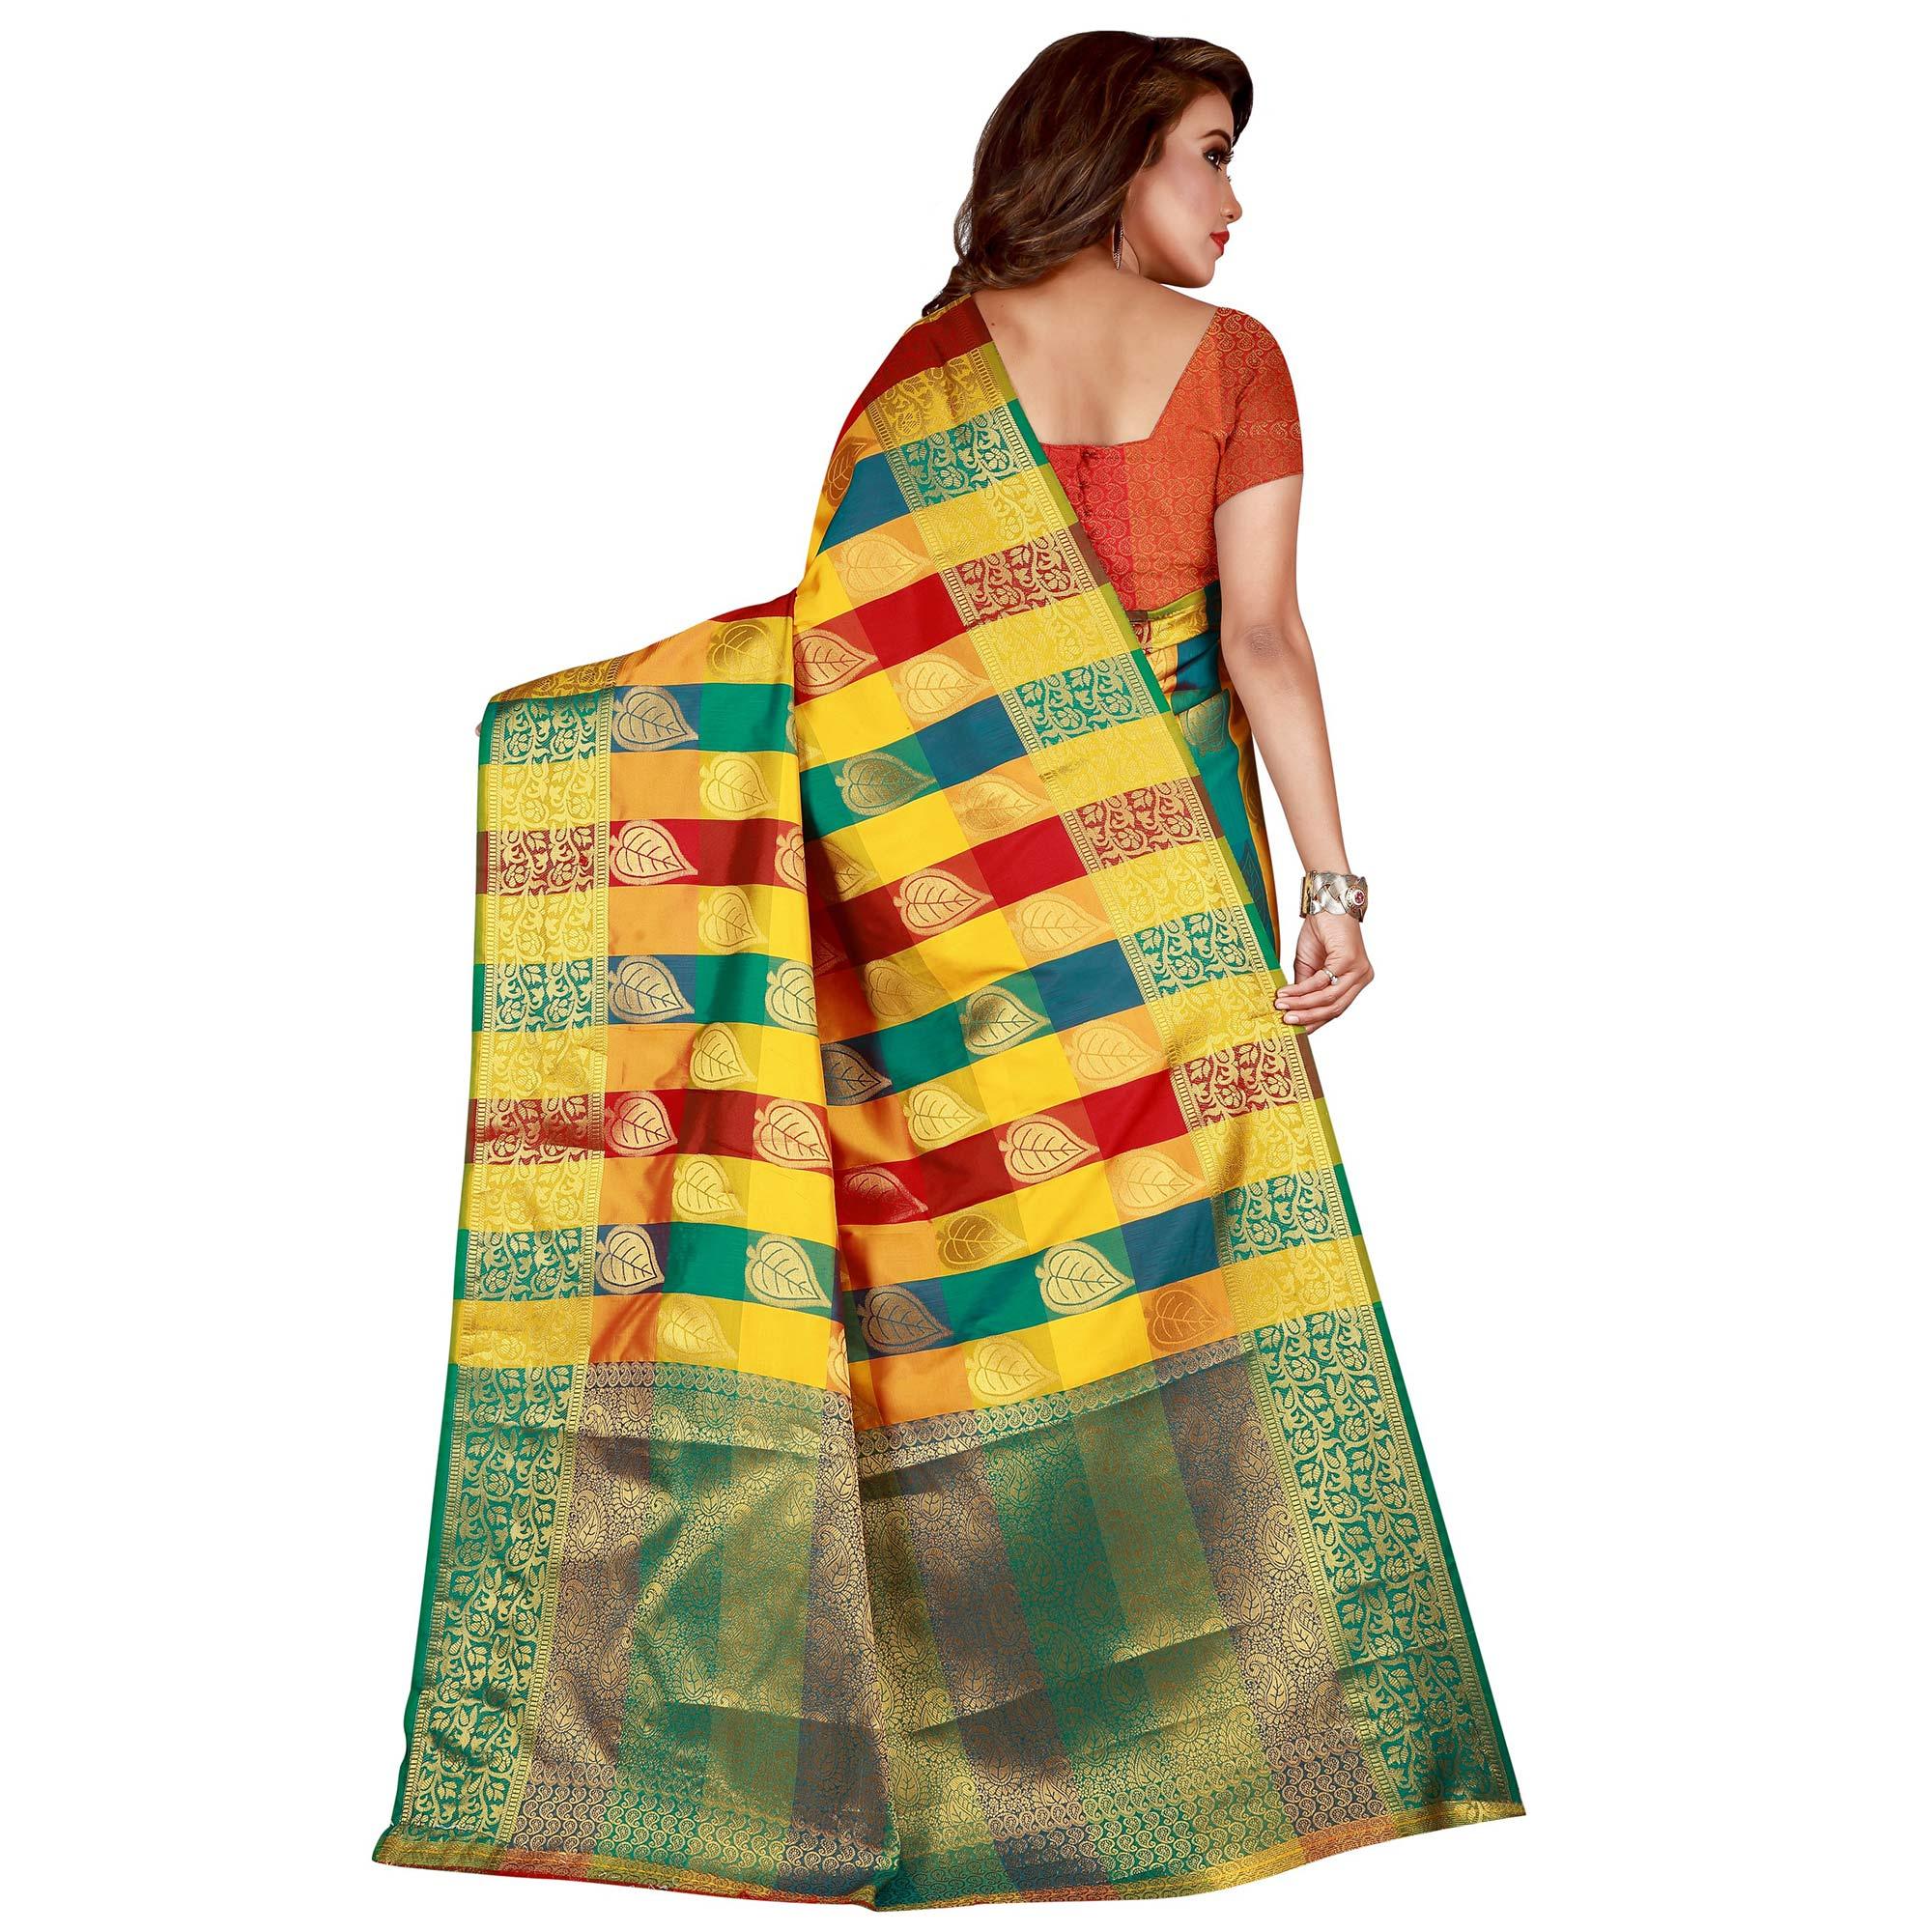 Opulent Yellow-Green Colored festive Wear Banarasi Silk Saree - Peachmode